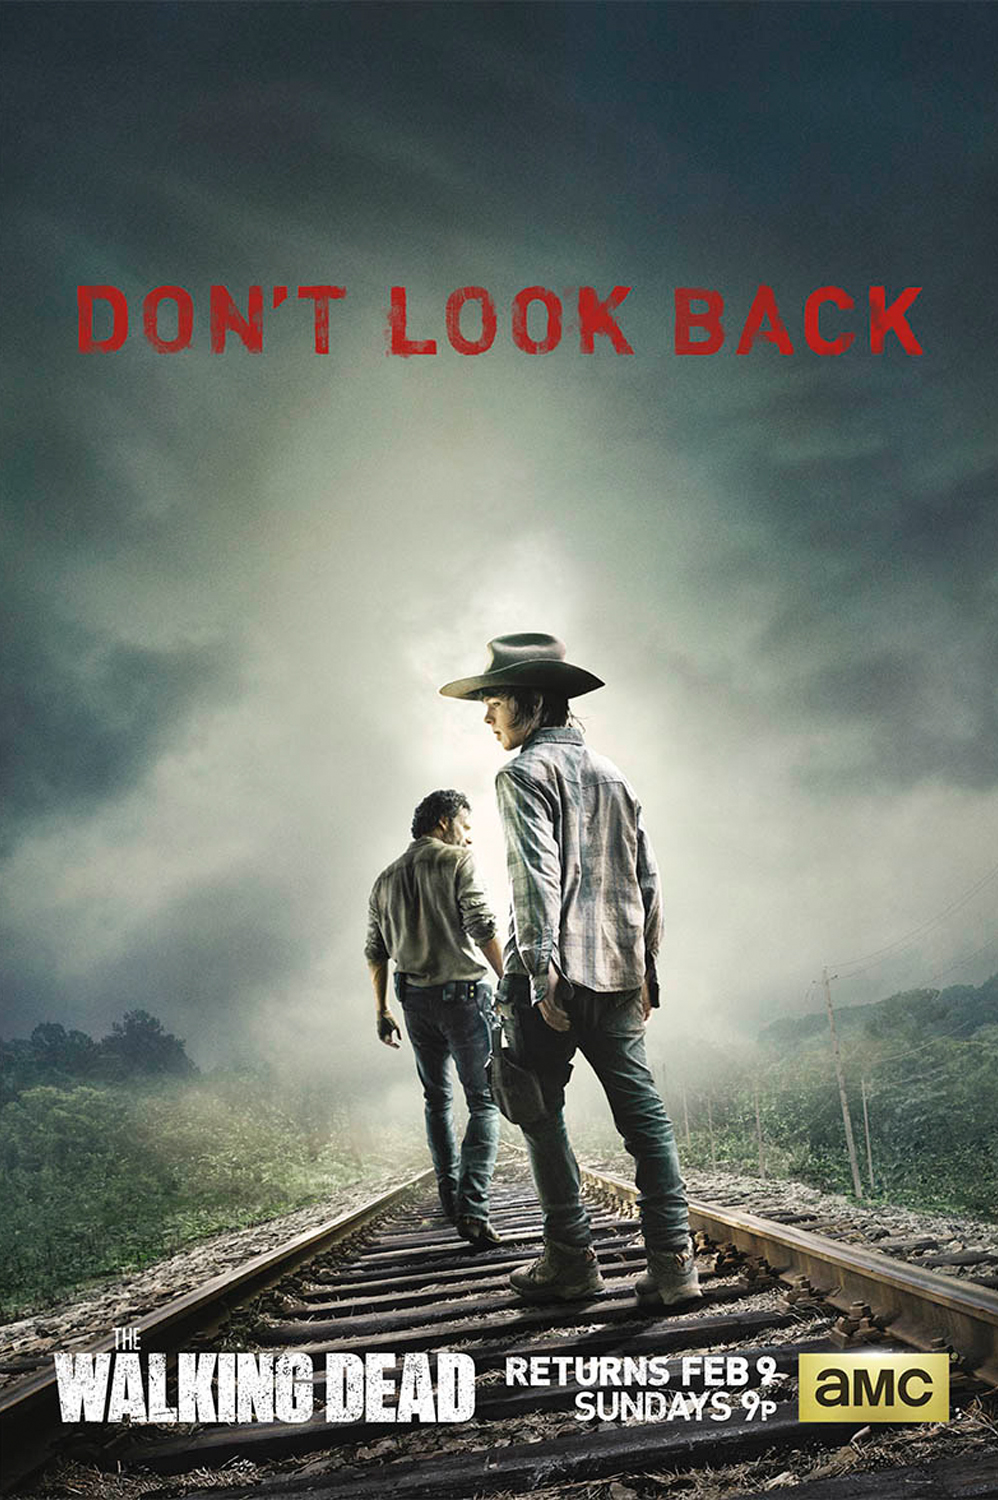 The Walking Dead Season-3 Jailhouse Poster Rick on Bus Zombie Classic sheriff 